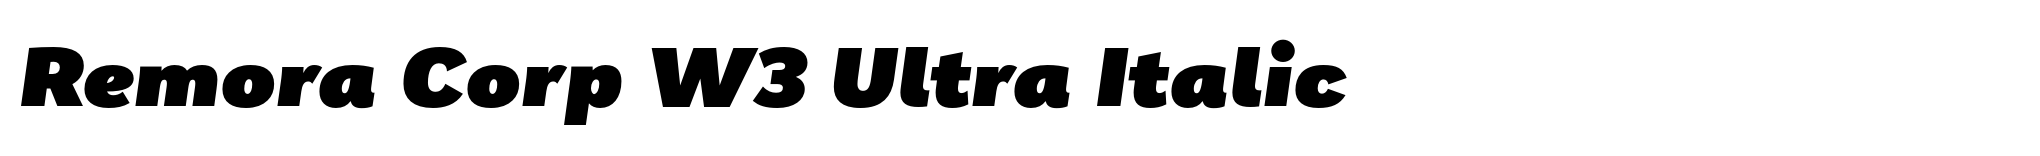 Remora Corp W3 Ultra Italic image